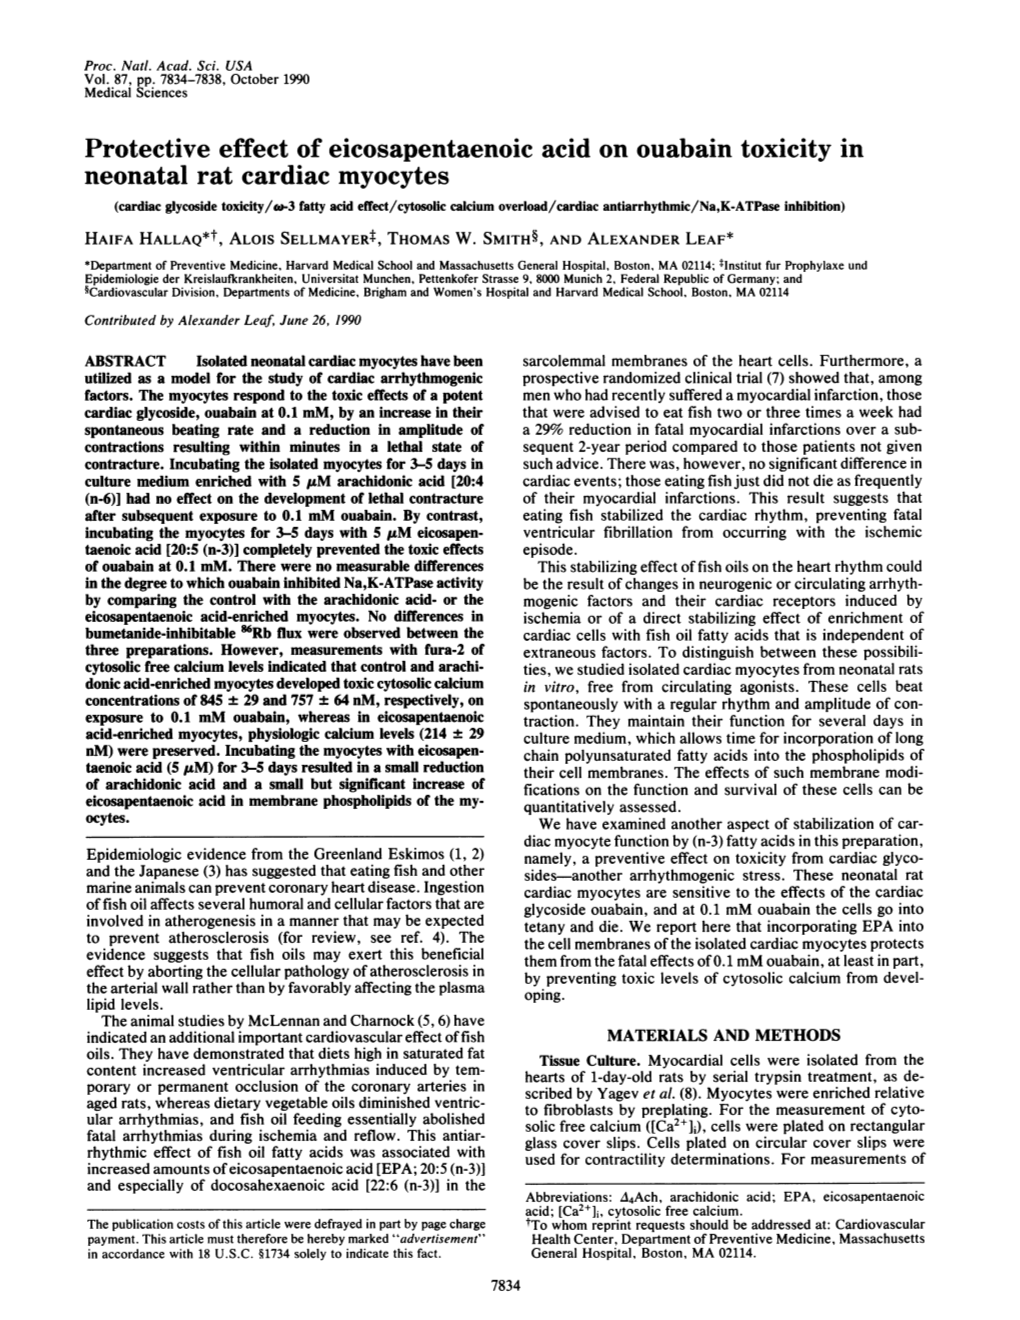 Protective Effect of Eicosapentaenoic Acid on Ouabain Toxicity in Neonatal Rat Cardiac Myocytes